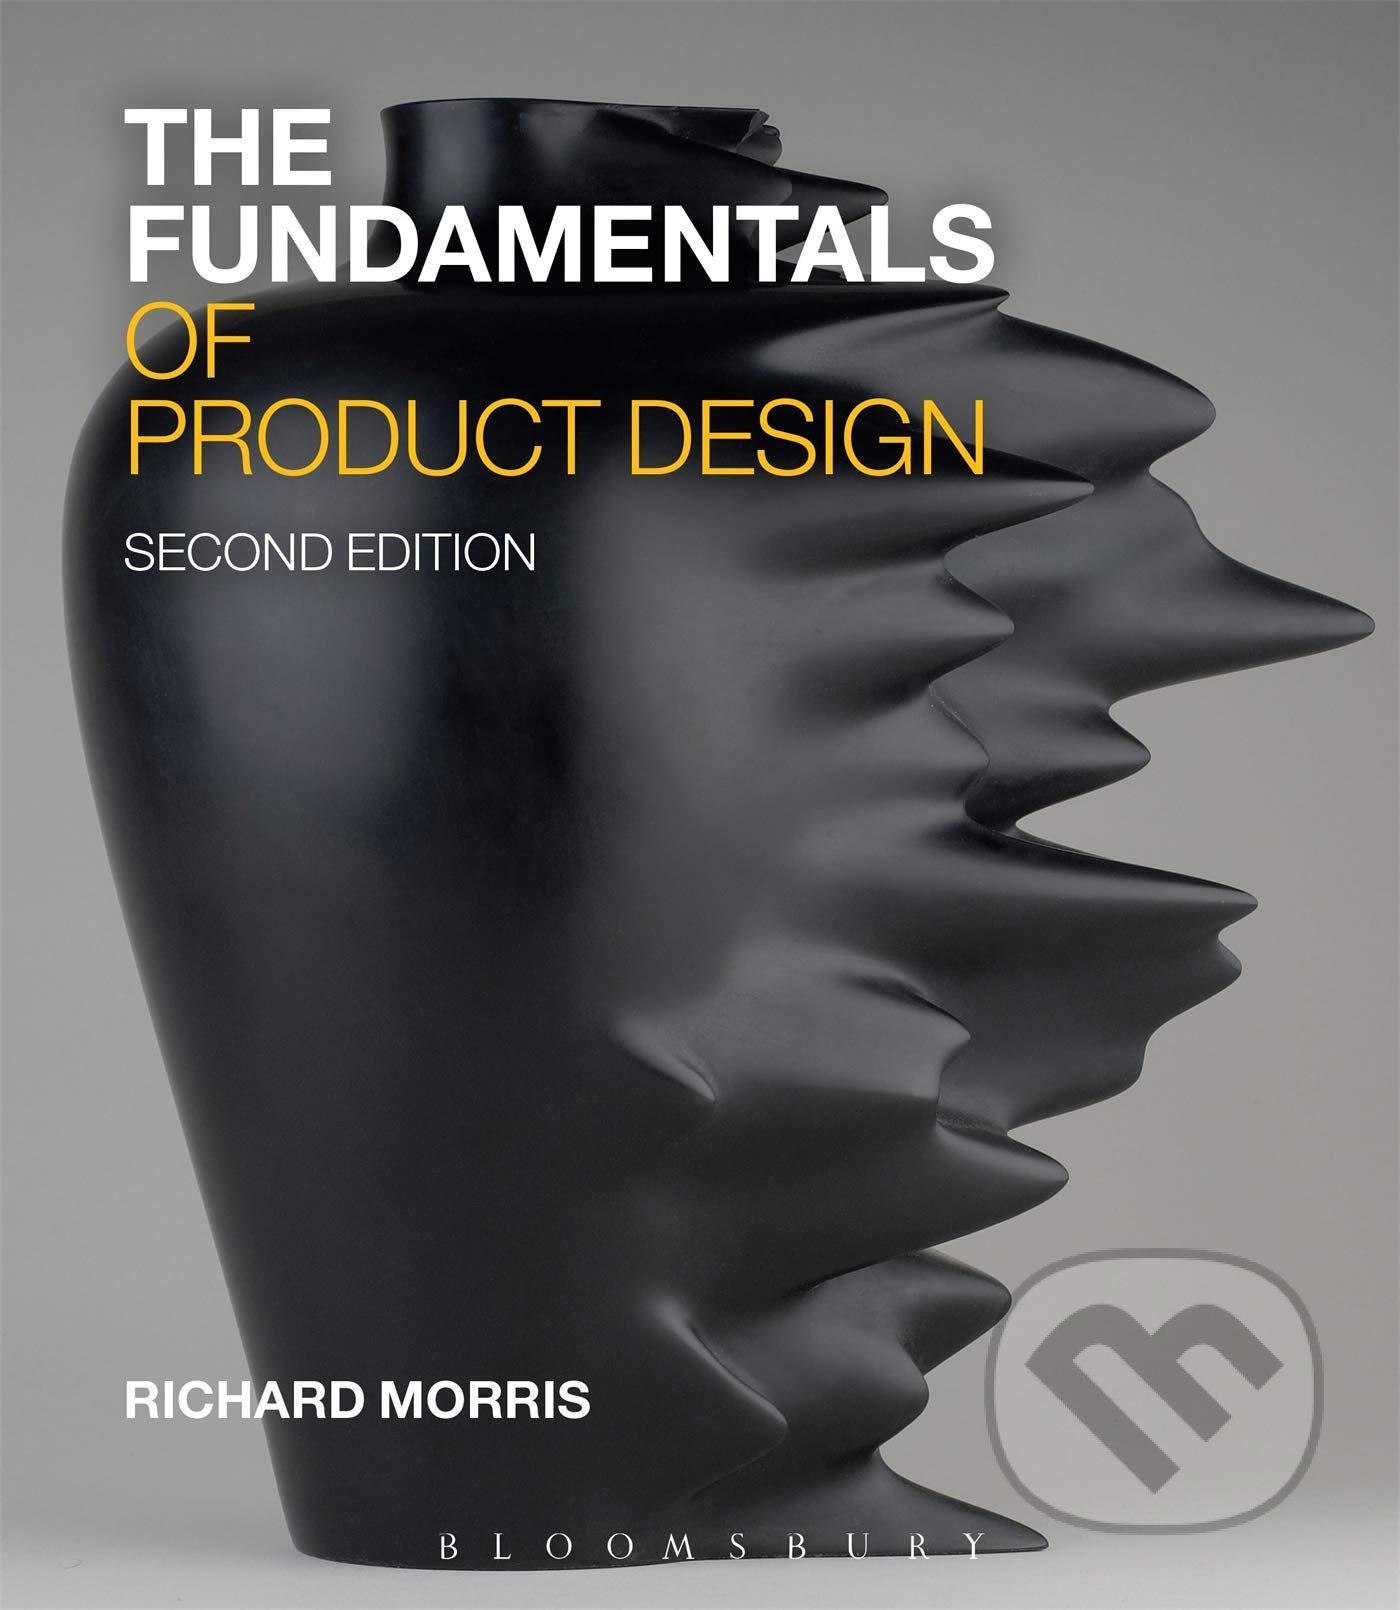 The Fundamentals of Product Design - Richard Morris, Fairchild Books, 2016